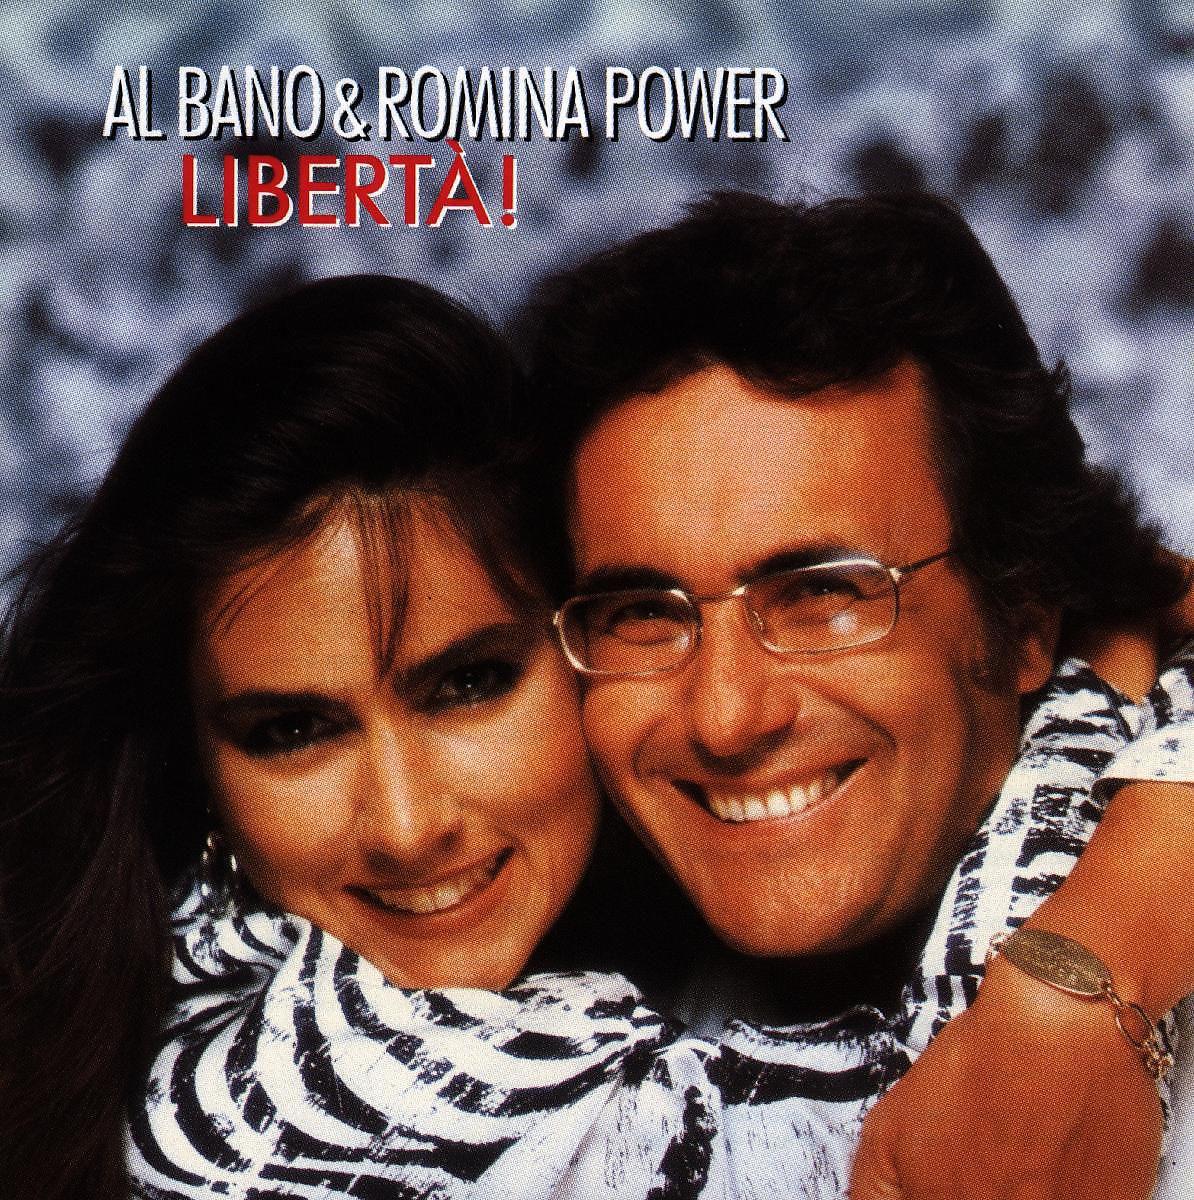 Песни аль бано и ромина пауэр слушать. Аль Бано и Ромина Пауэр. Аль Бано и Ромина Liberta. Al bano & Romina Power Liberta 1987 LP. Аль Бано и Ромина - Либерта.